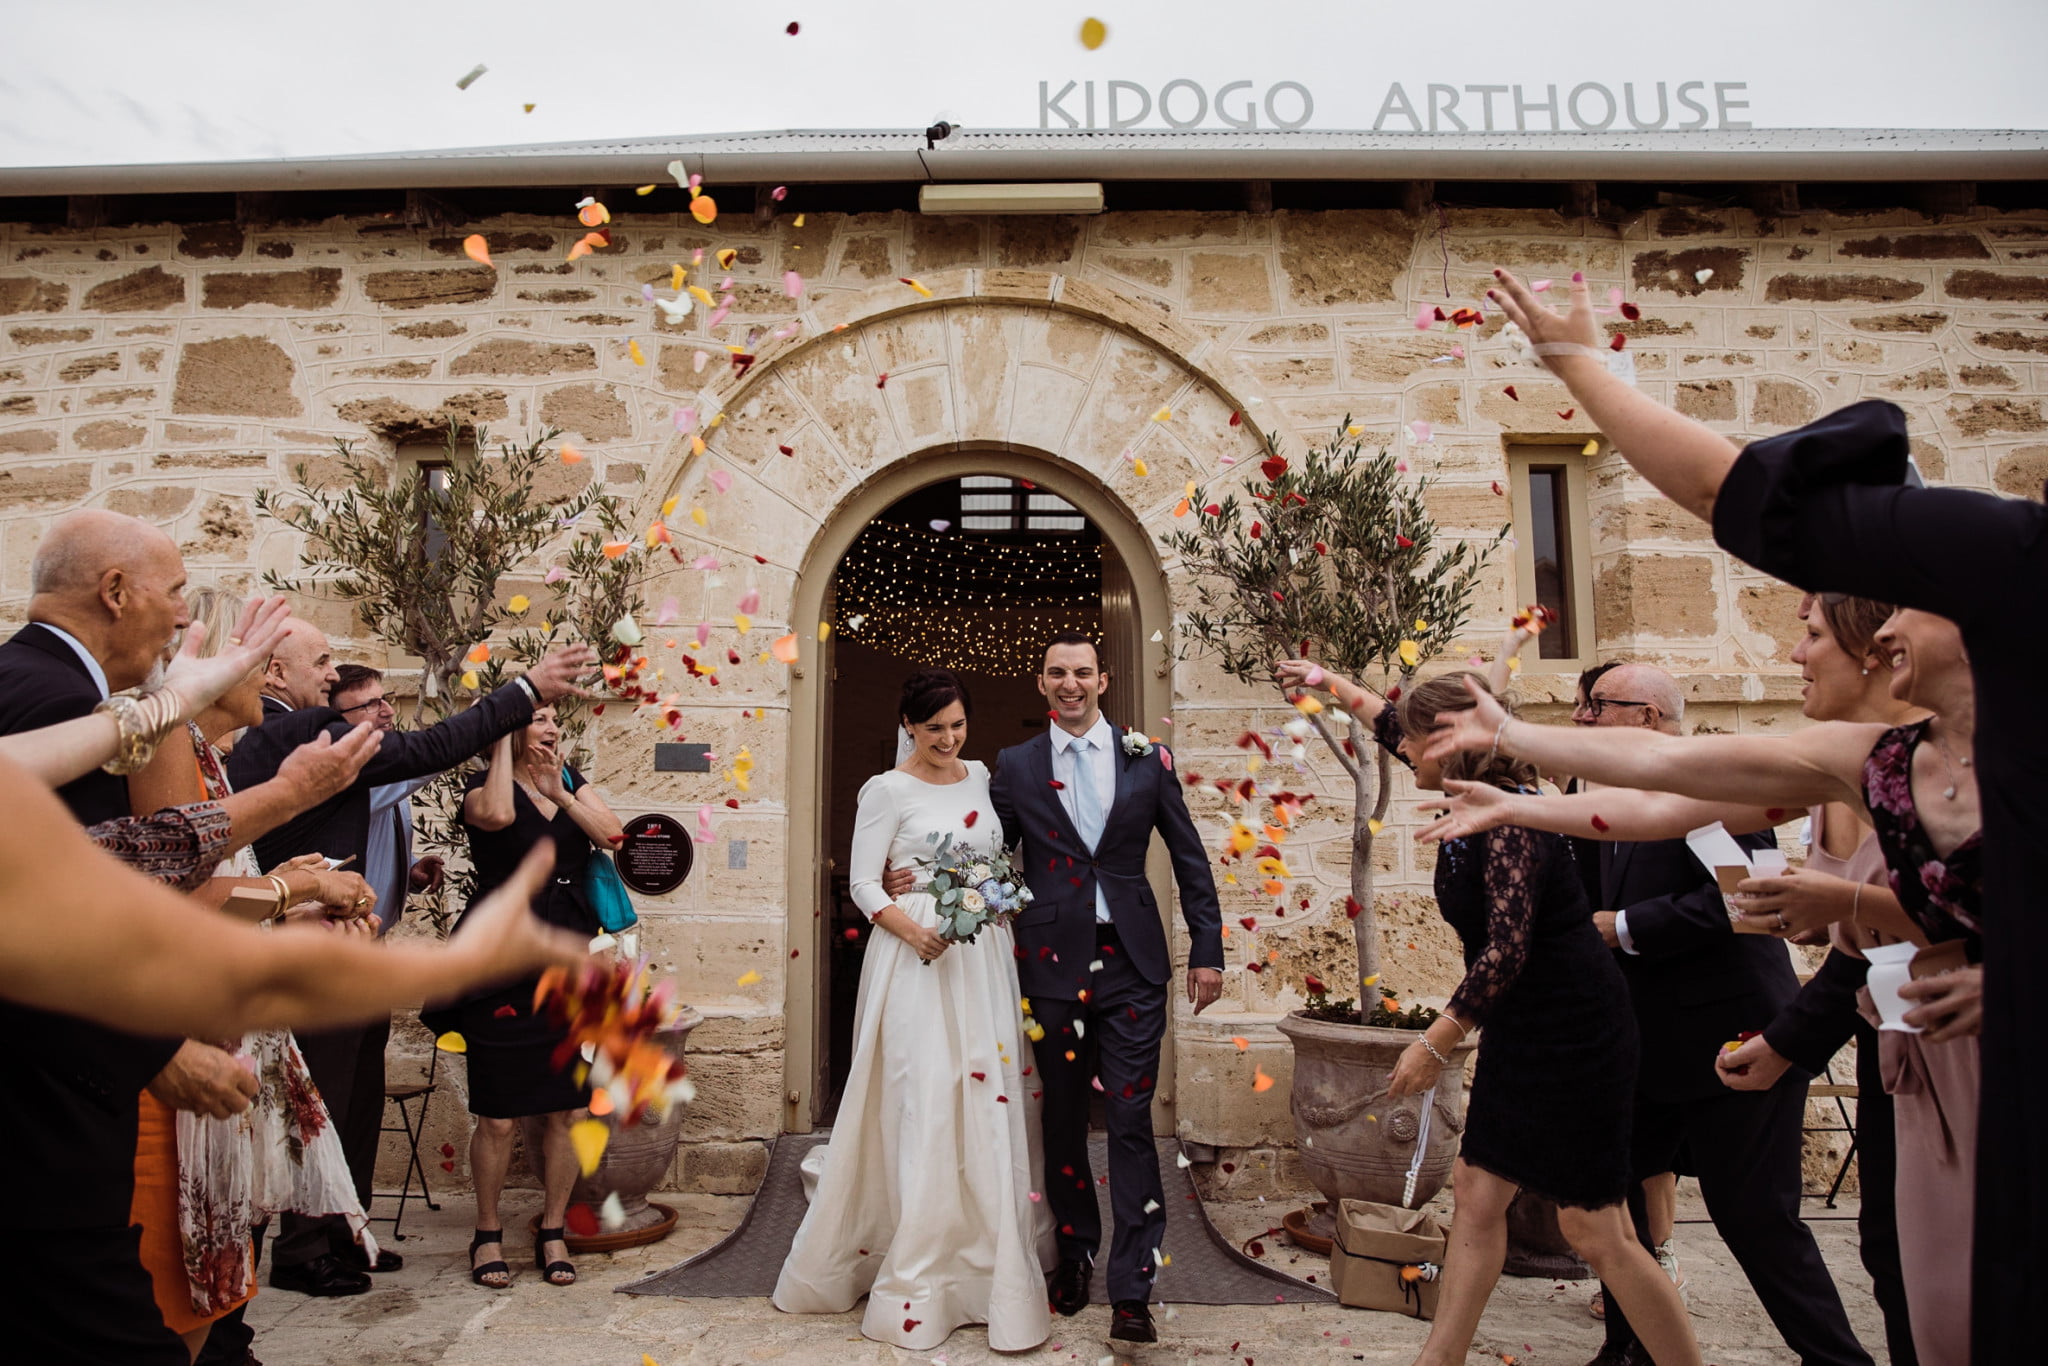 Photo of wedding at Kidogo Arthouse by Andrew Richards